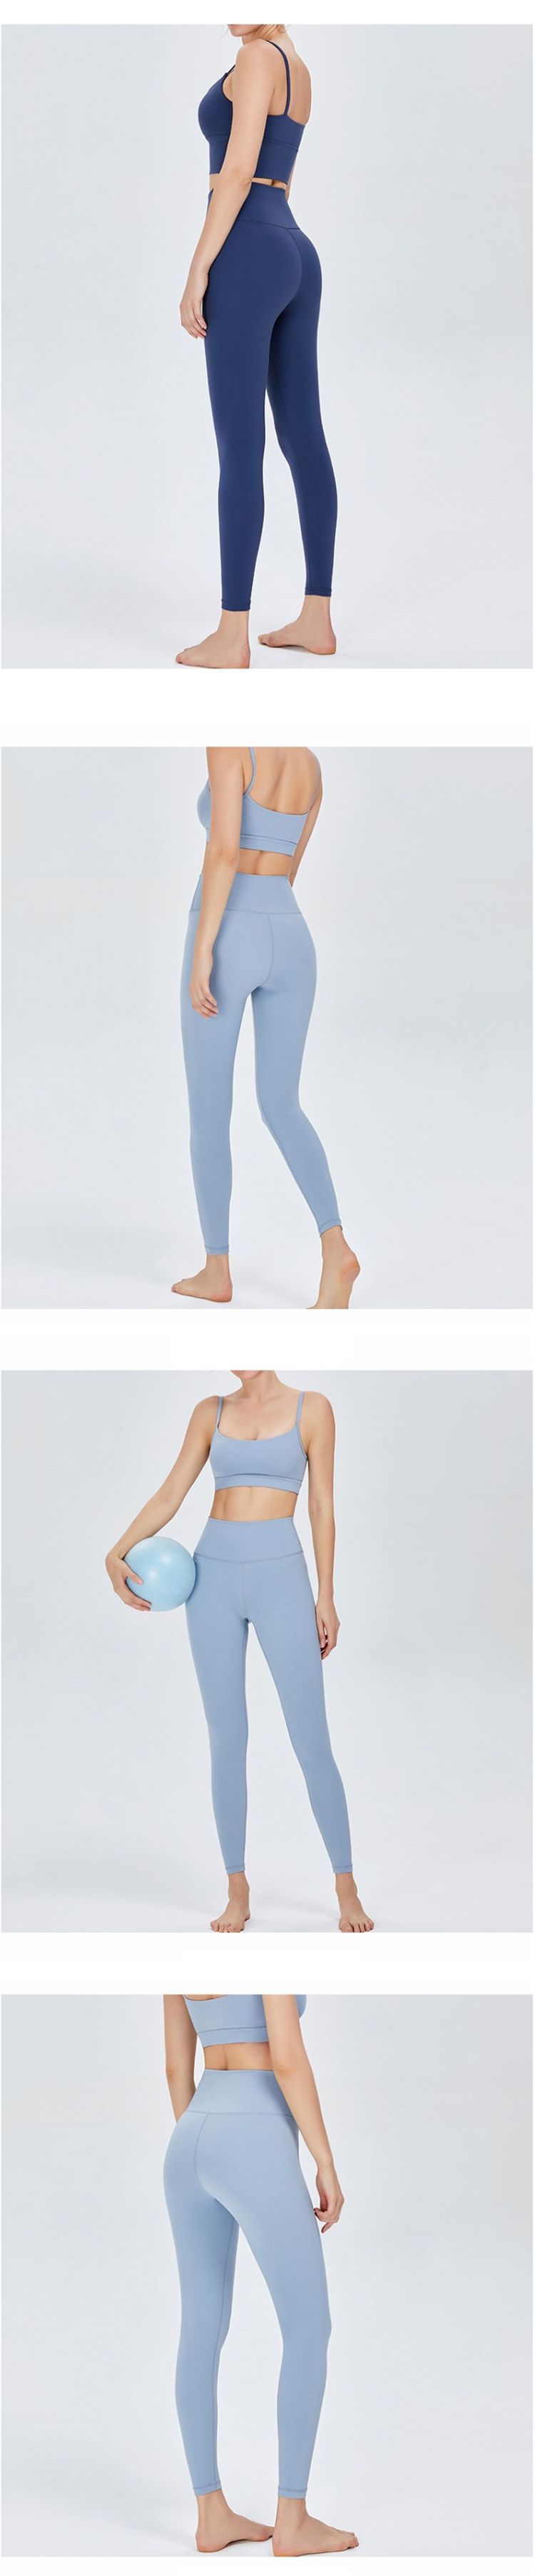 Luplus Chafe-Free Yoga Pants